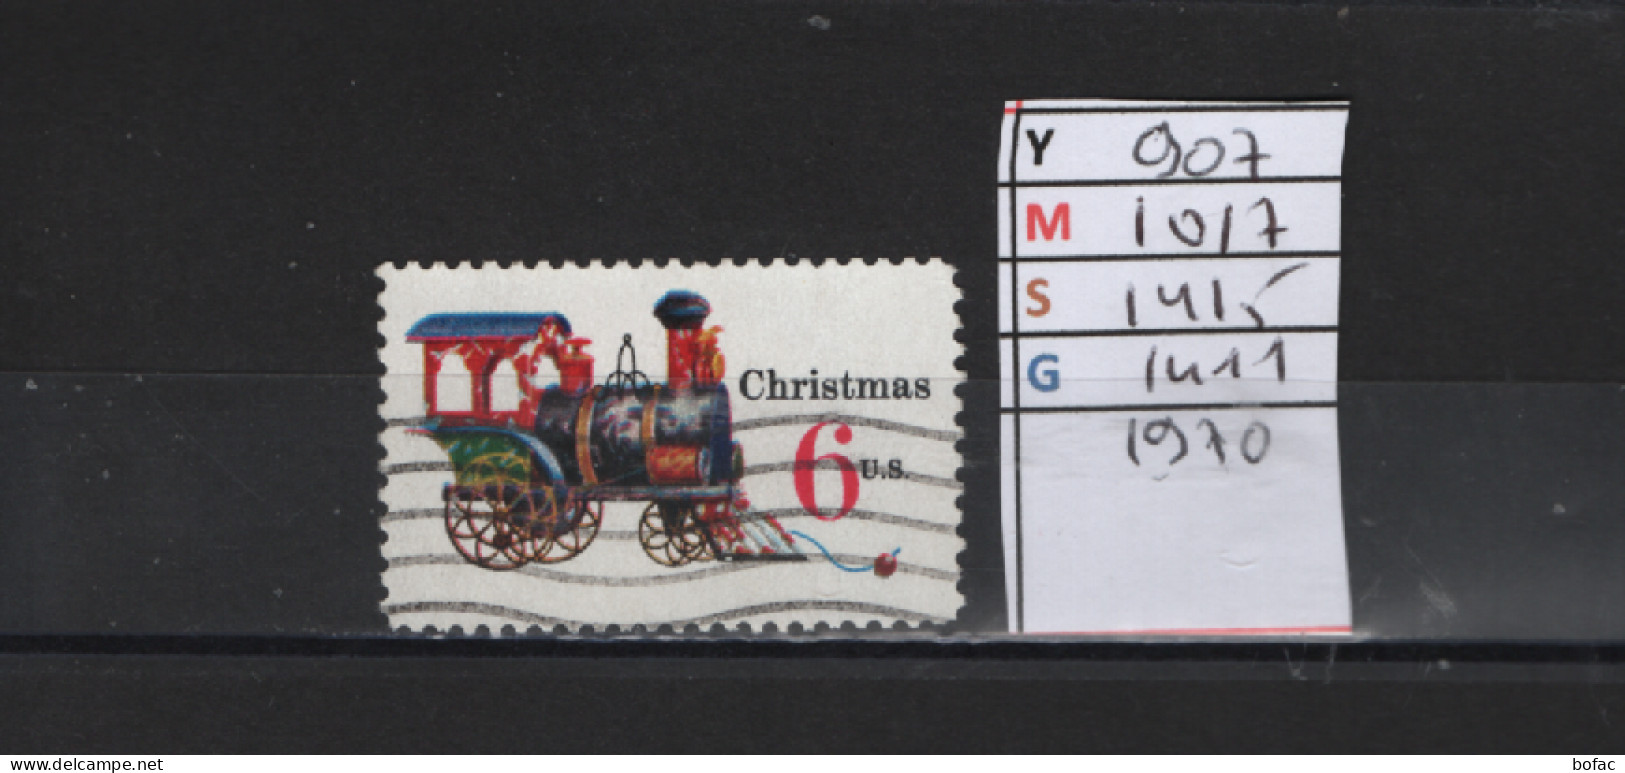 PRIX FIXE Obl  907 YT 1017 MIC 1415 SCO 1411 GIB Christmas Noël Jouet Locomotive 1970 Etats Unis 58A/13 - Used Stamps